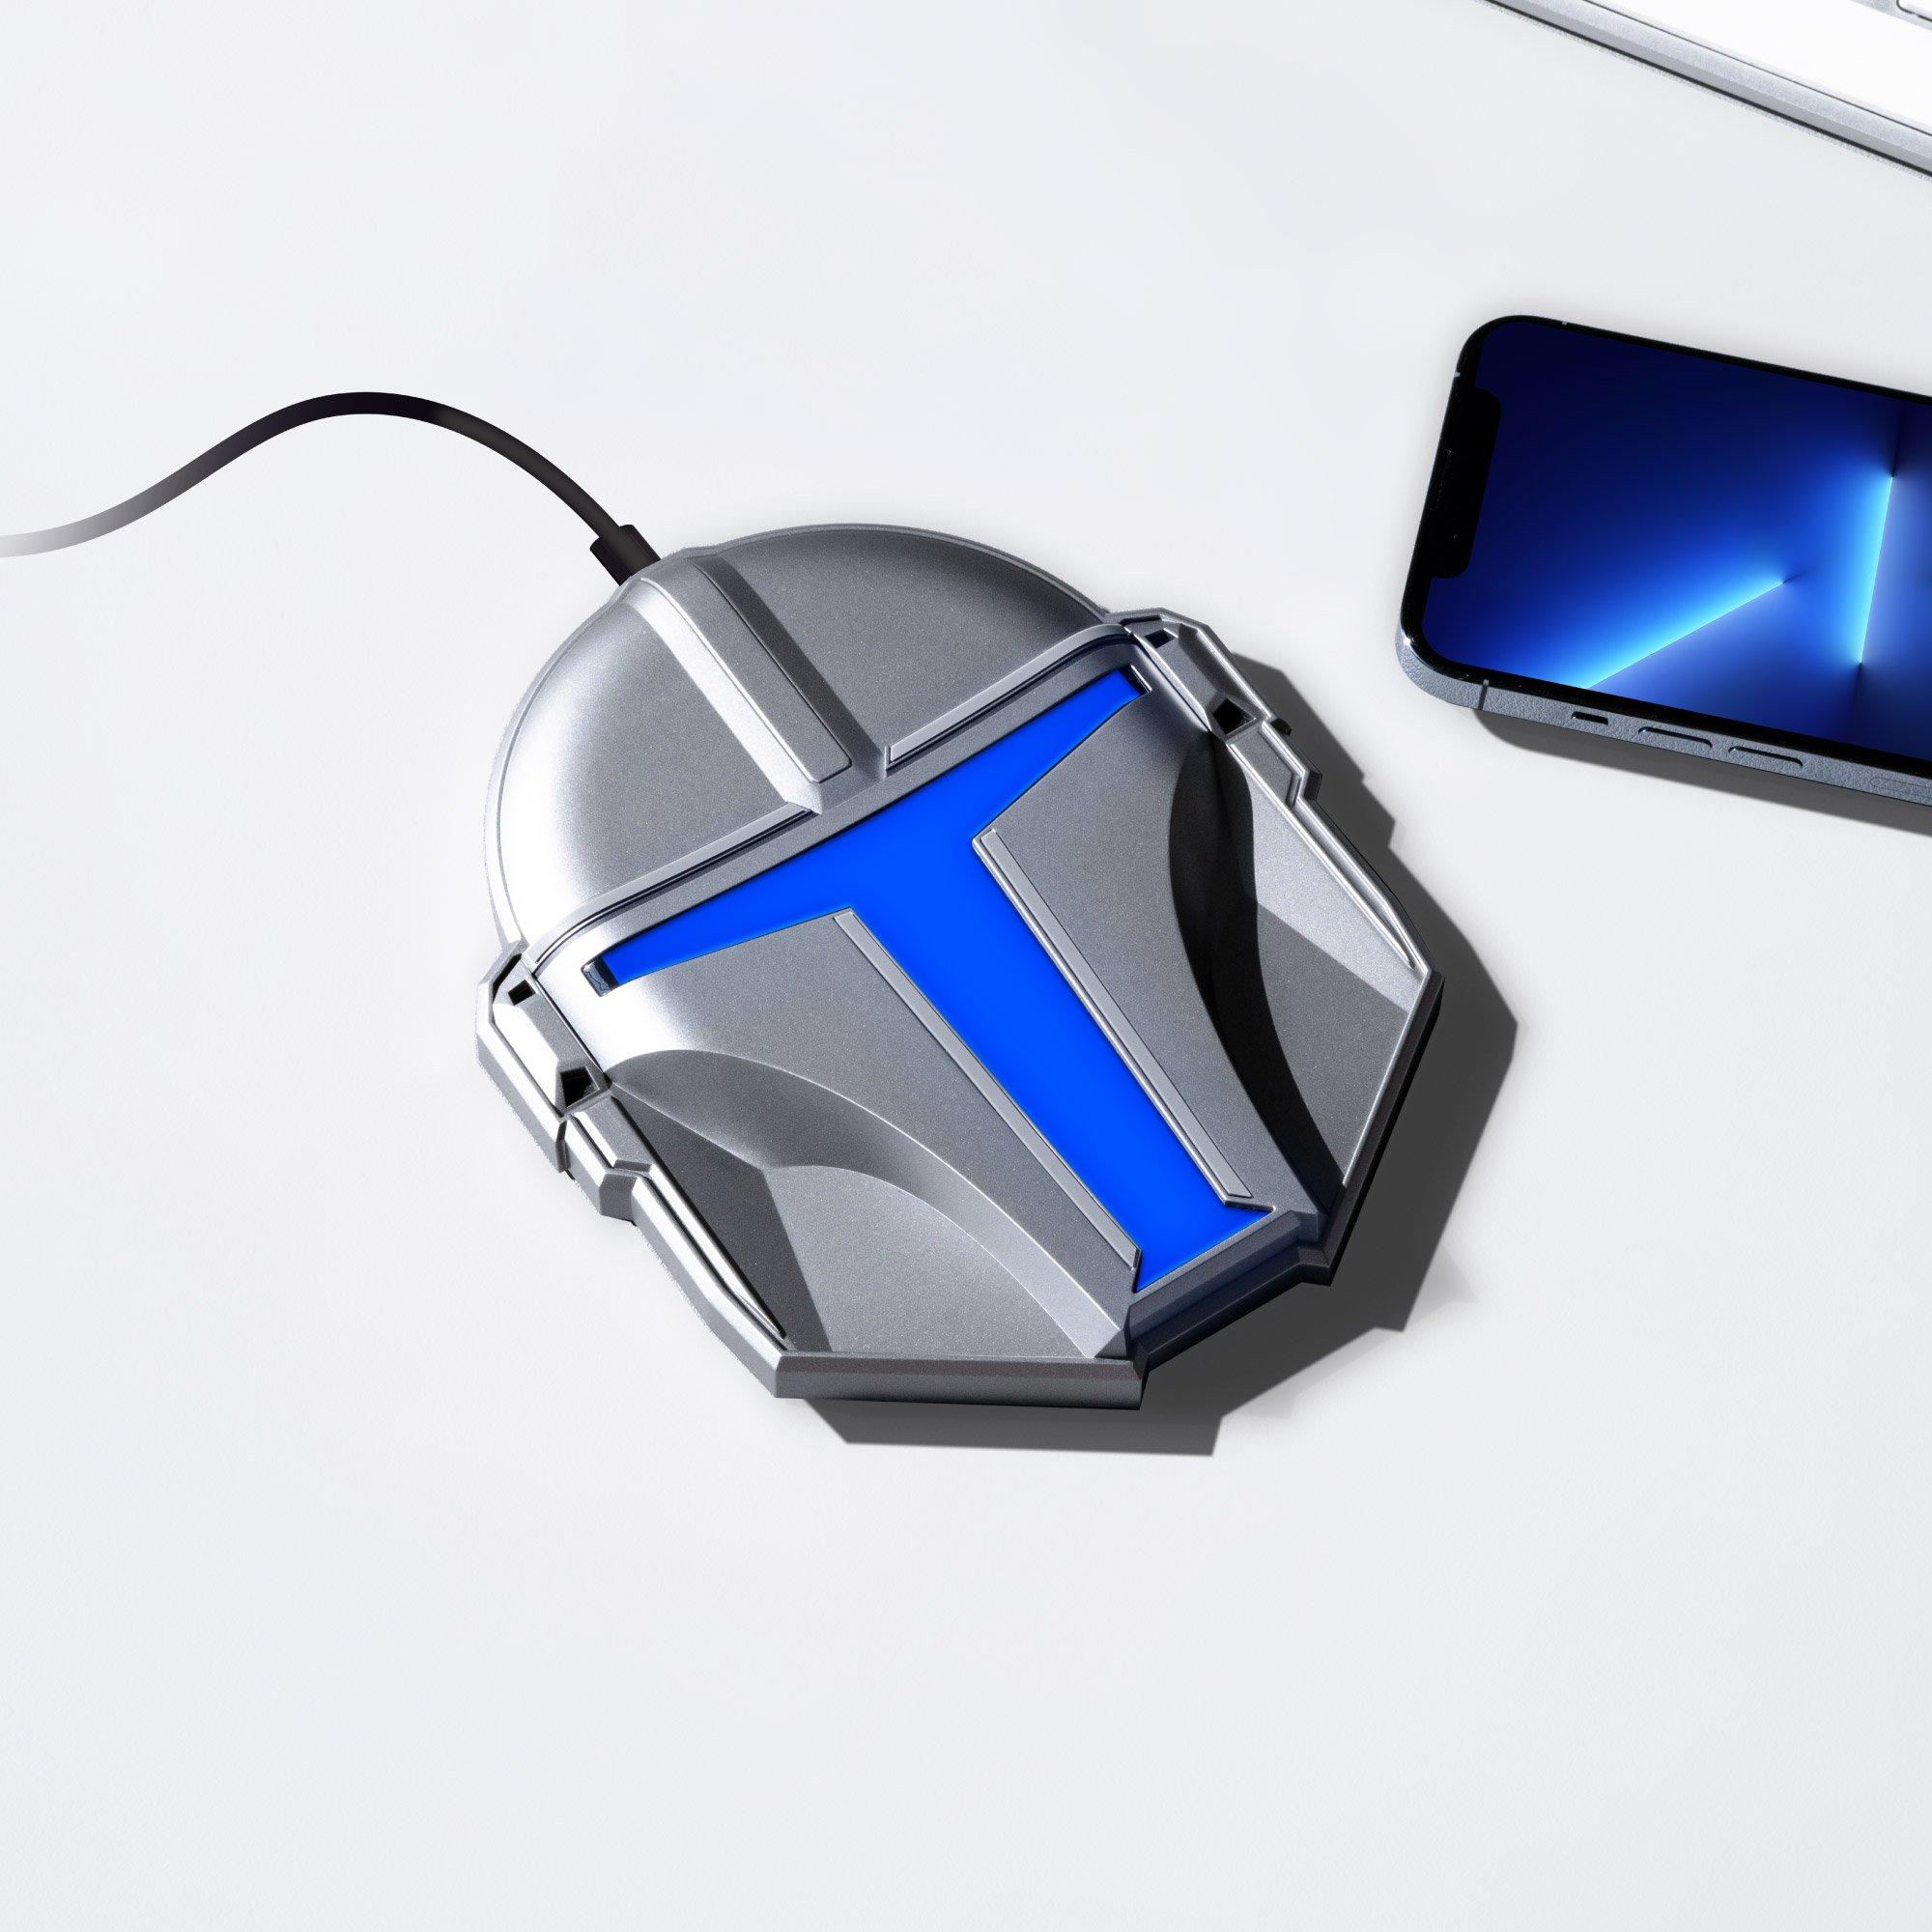 Geeknet Star Wars The Mandalorian Light Up Wireless Charging Pad GameStop Exclusive